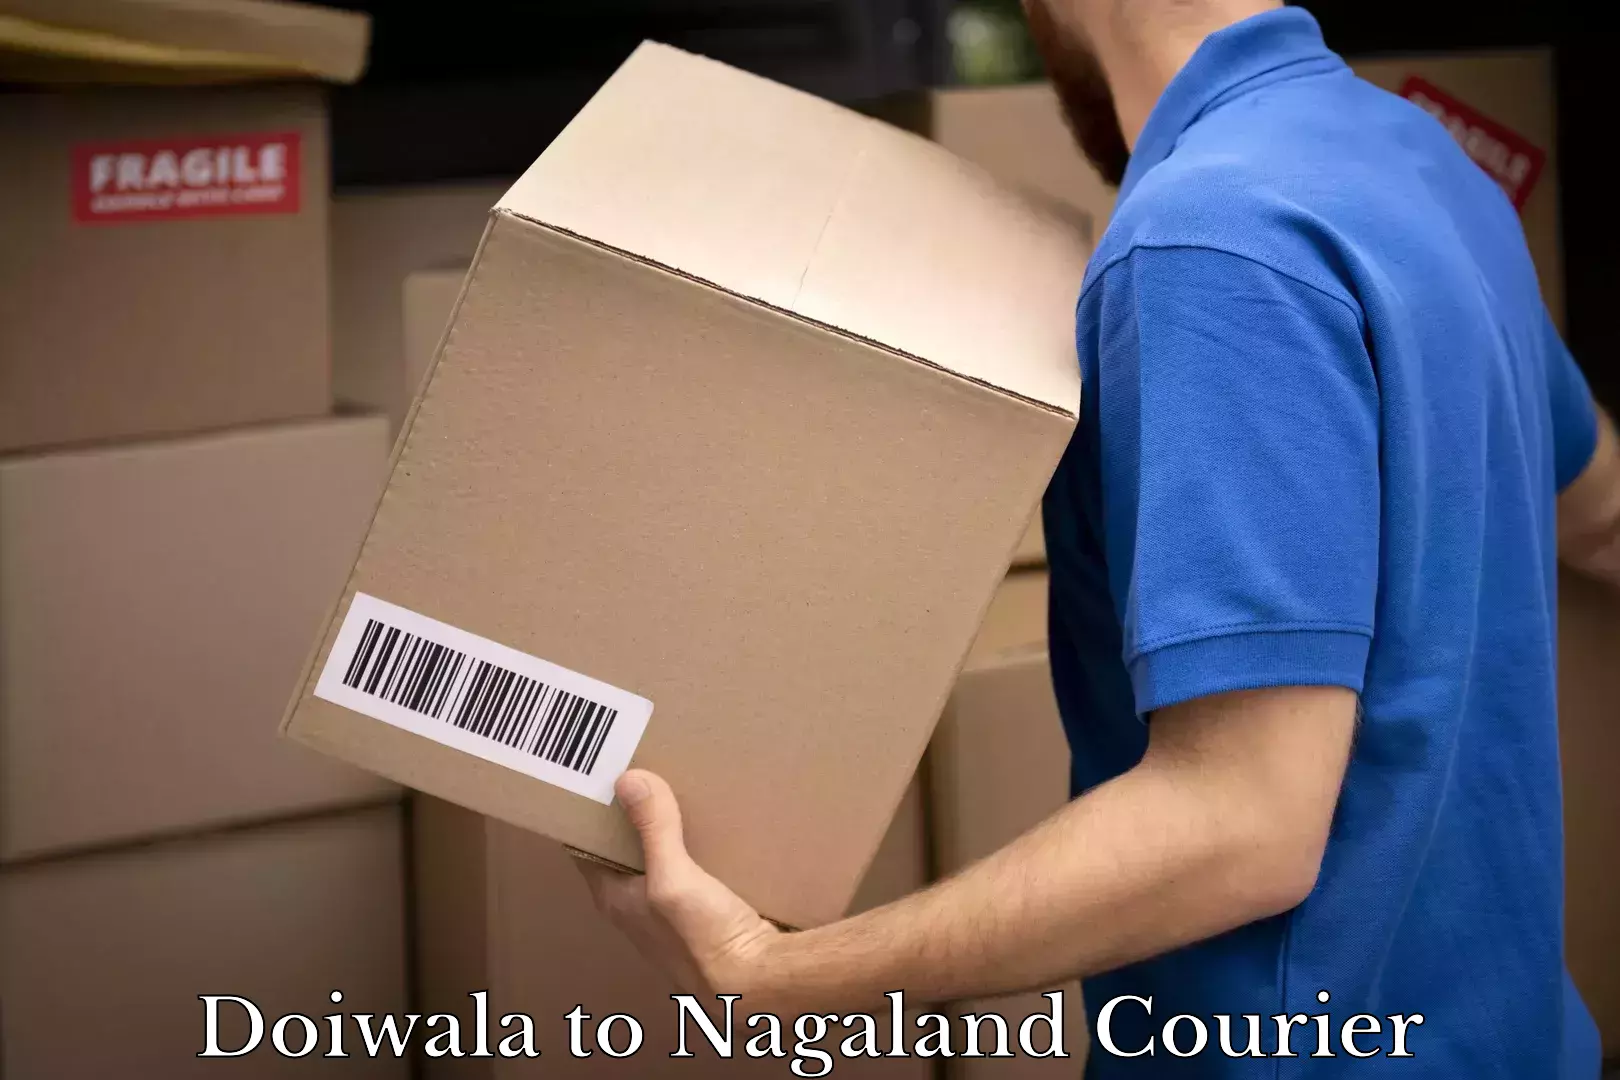 Cash on delivery service Doiwala to Nagaland